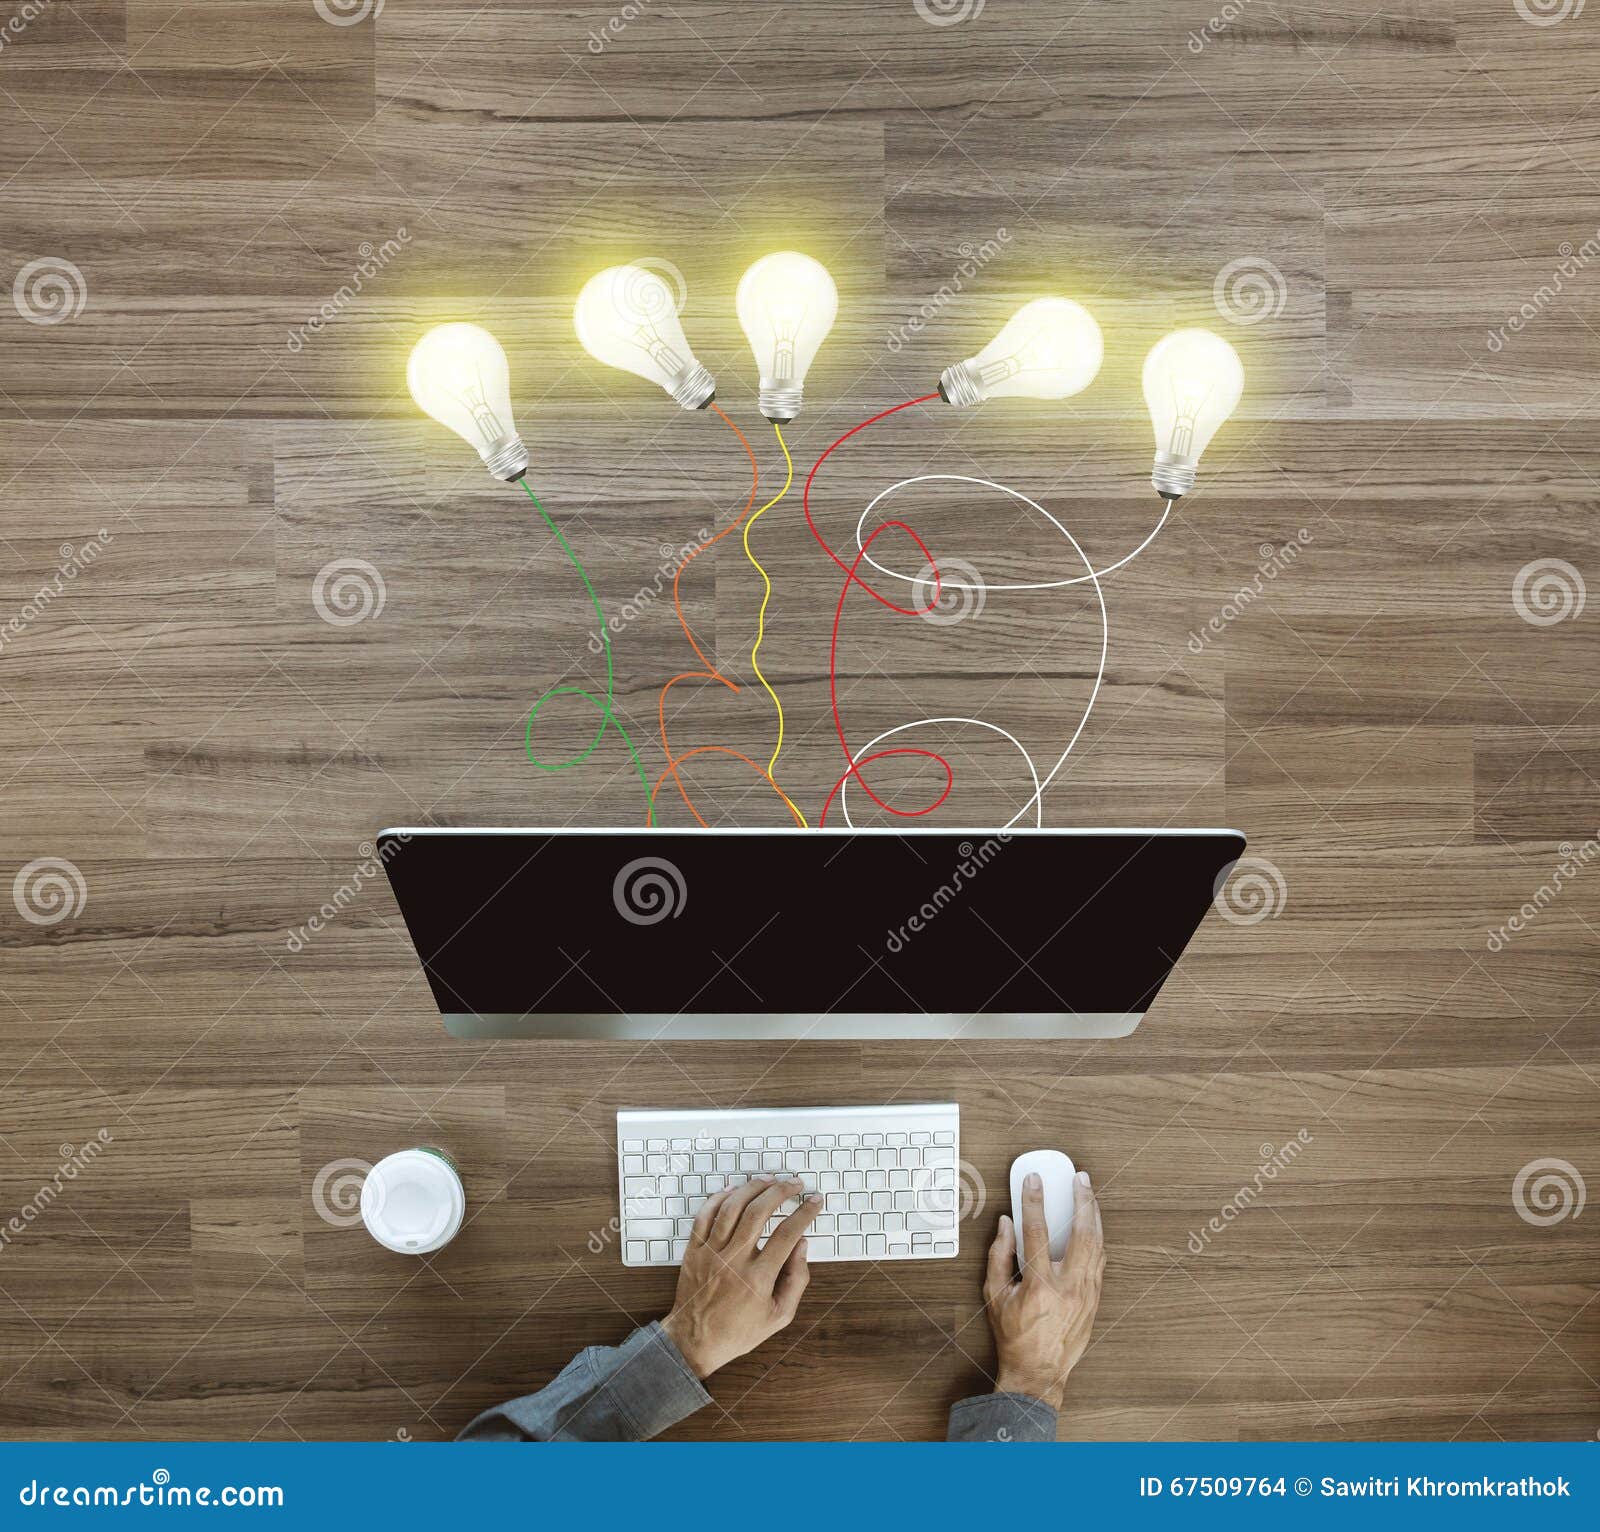 Working On Desktop Computer With Creative Light Bulb Ideas Stock